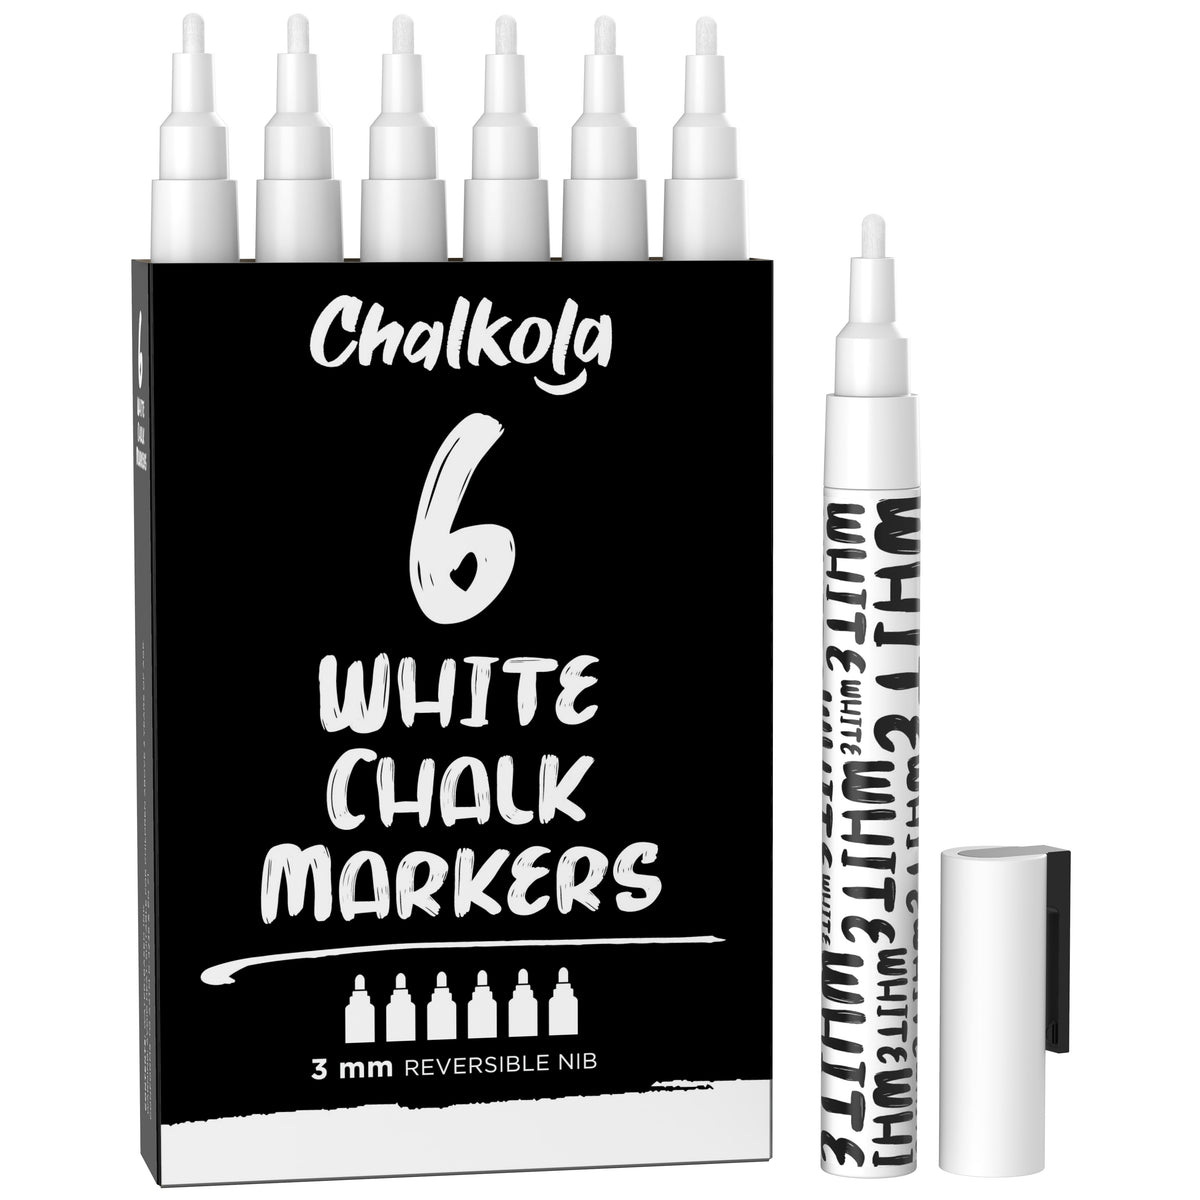 Height Measurement Stickers White Liquid Chalk Pen Erasable